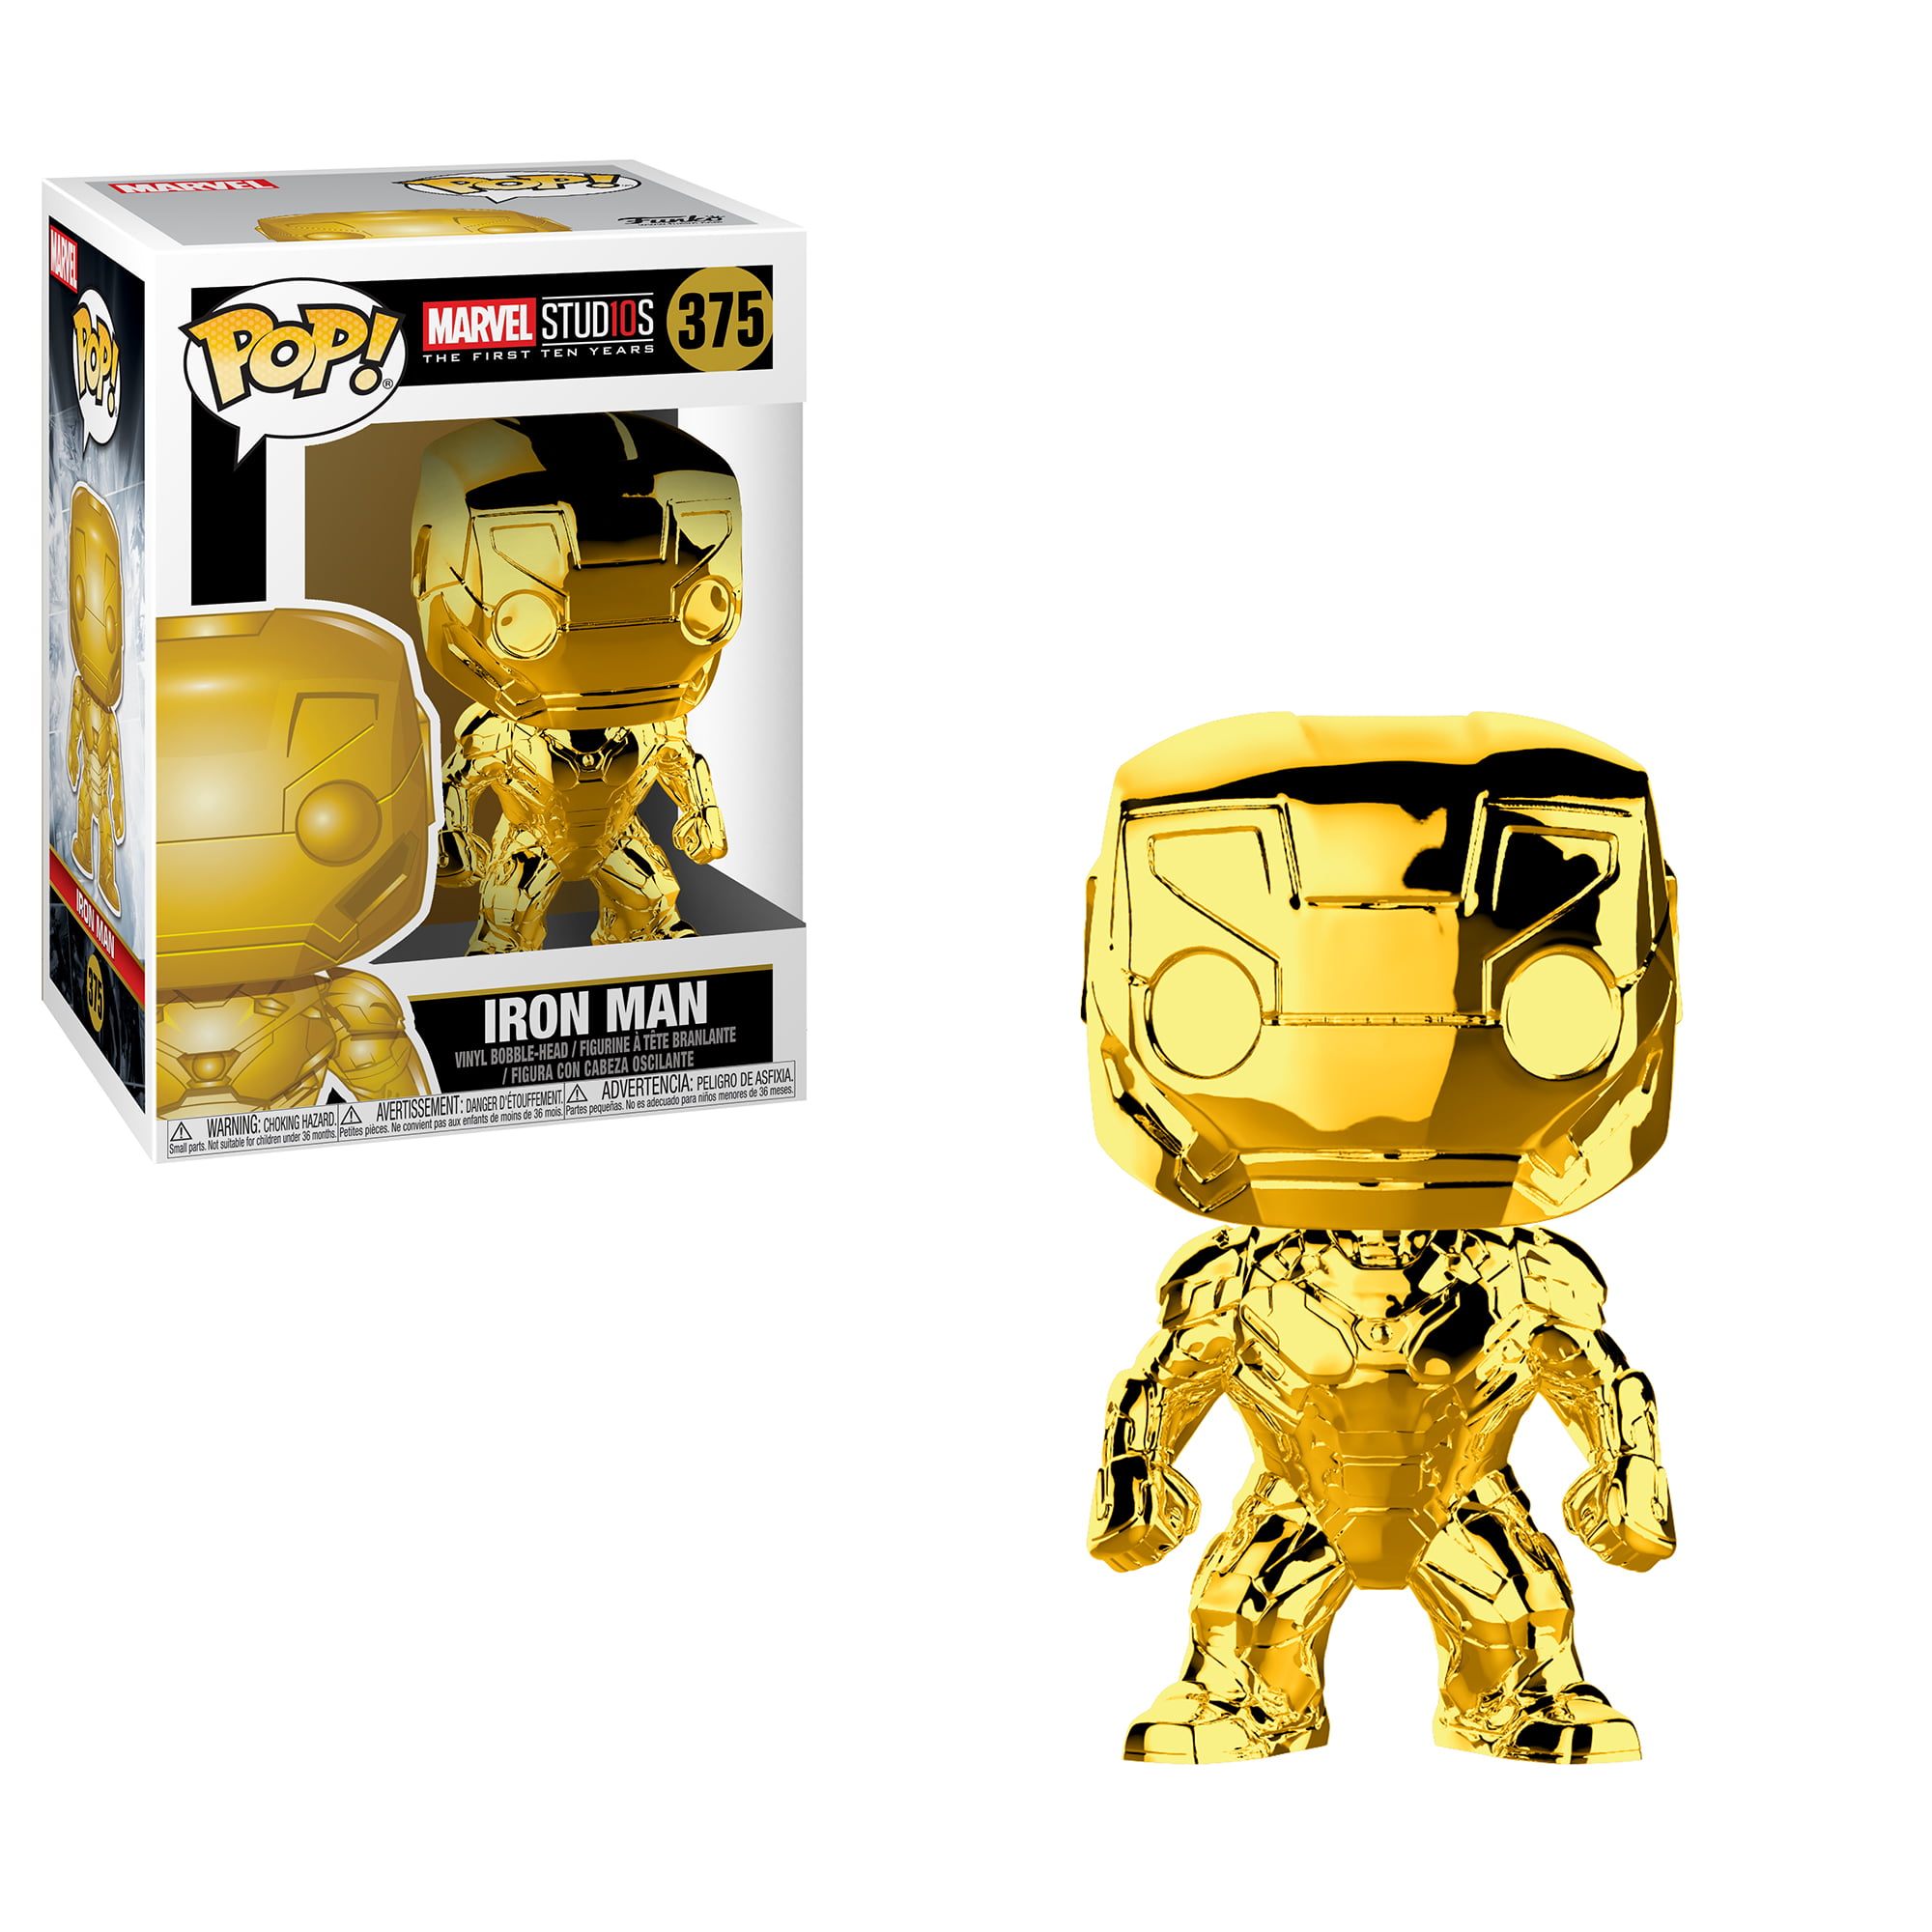 Marvel Studios 10th Anniversary Ant-man Gold Chrome Pop Vinyl Figure Funko for sale online